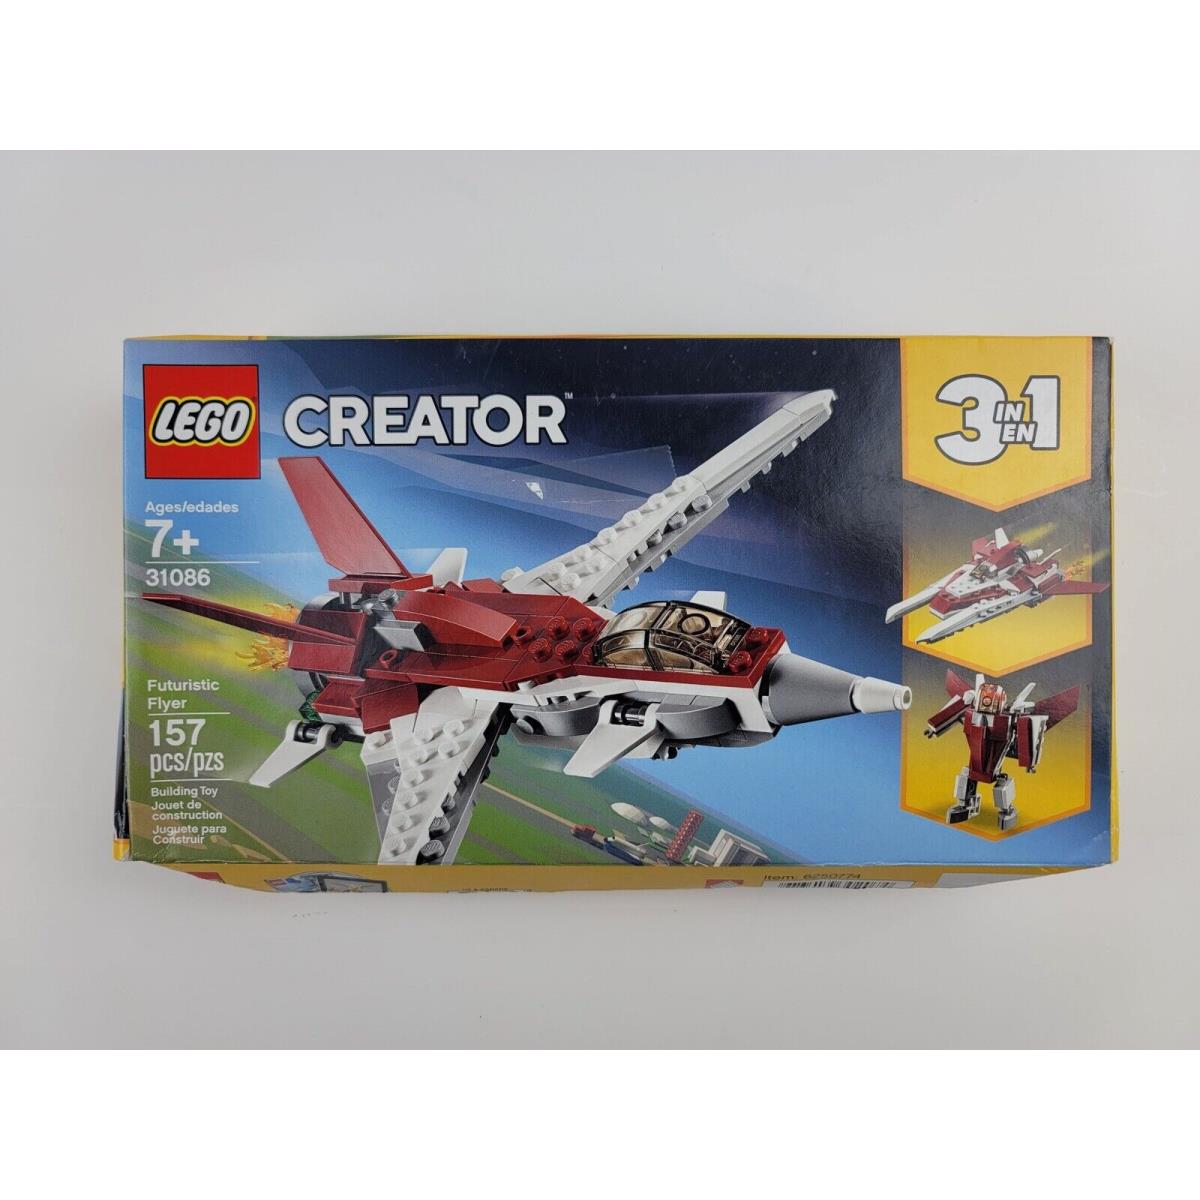 Lego Creator Futuristic Flyer Building Kit 31086 3 In 1 -157 Pieces